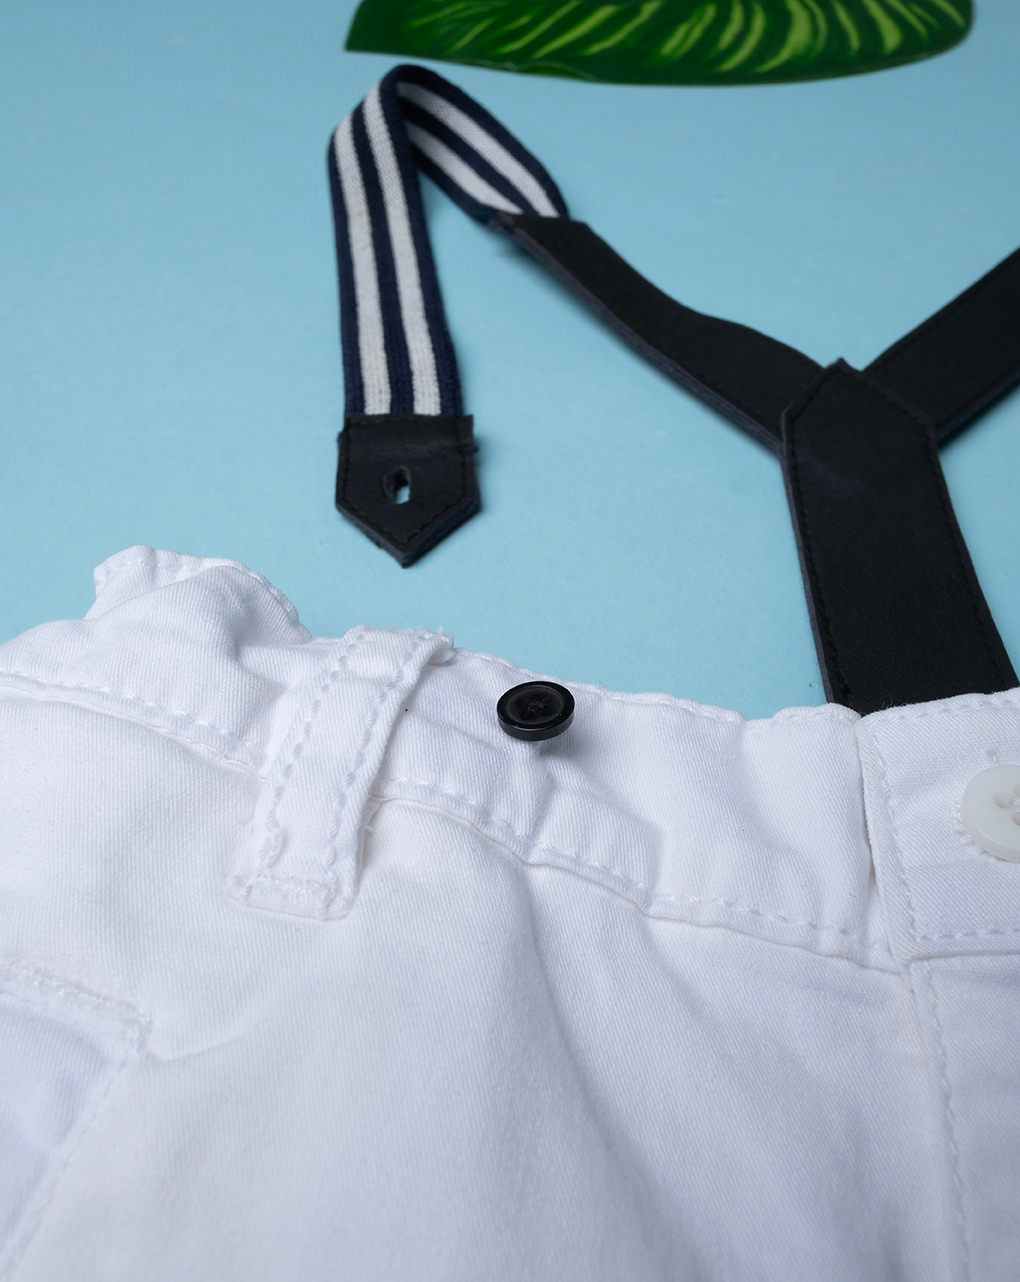 Pantalone bimbo bianco con bretelle - Prénatal